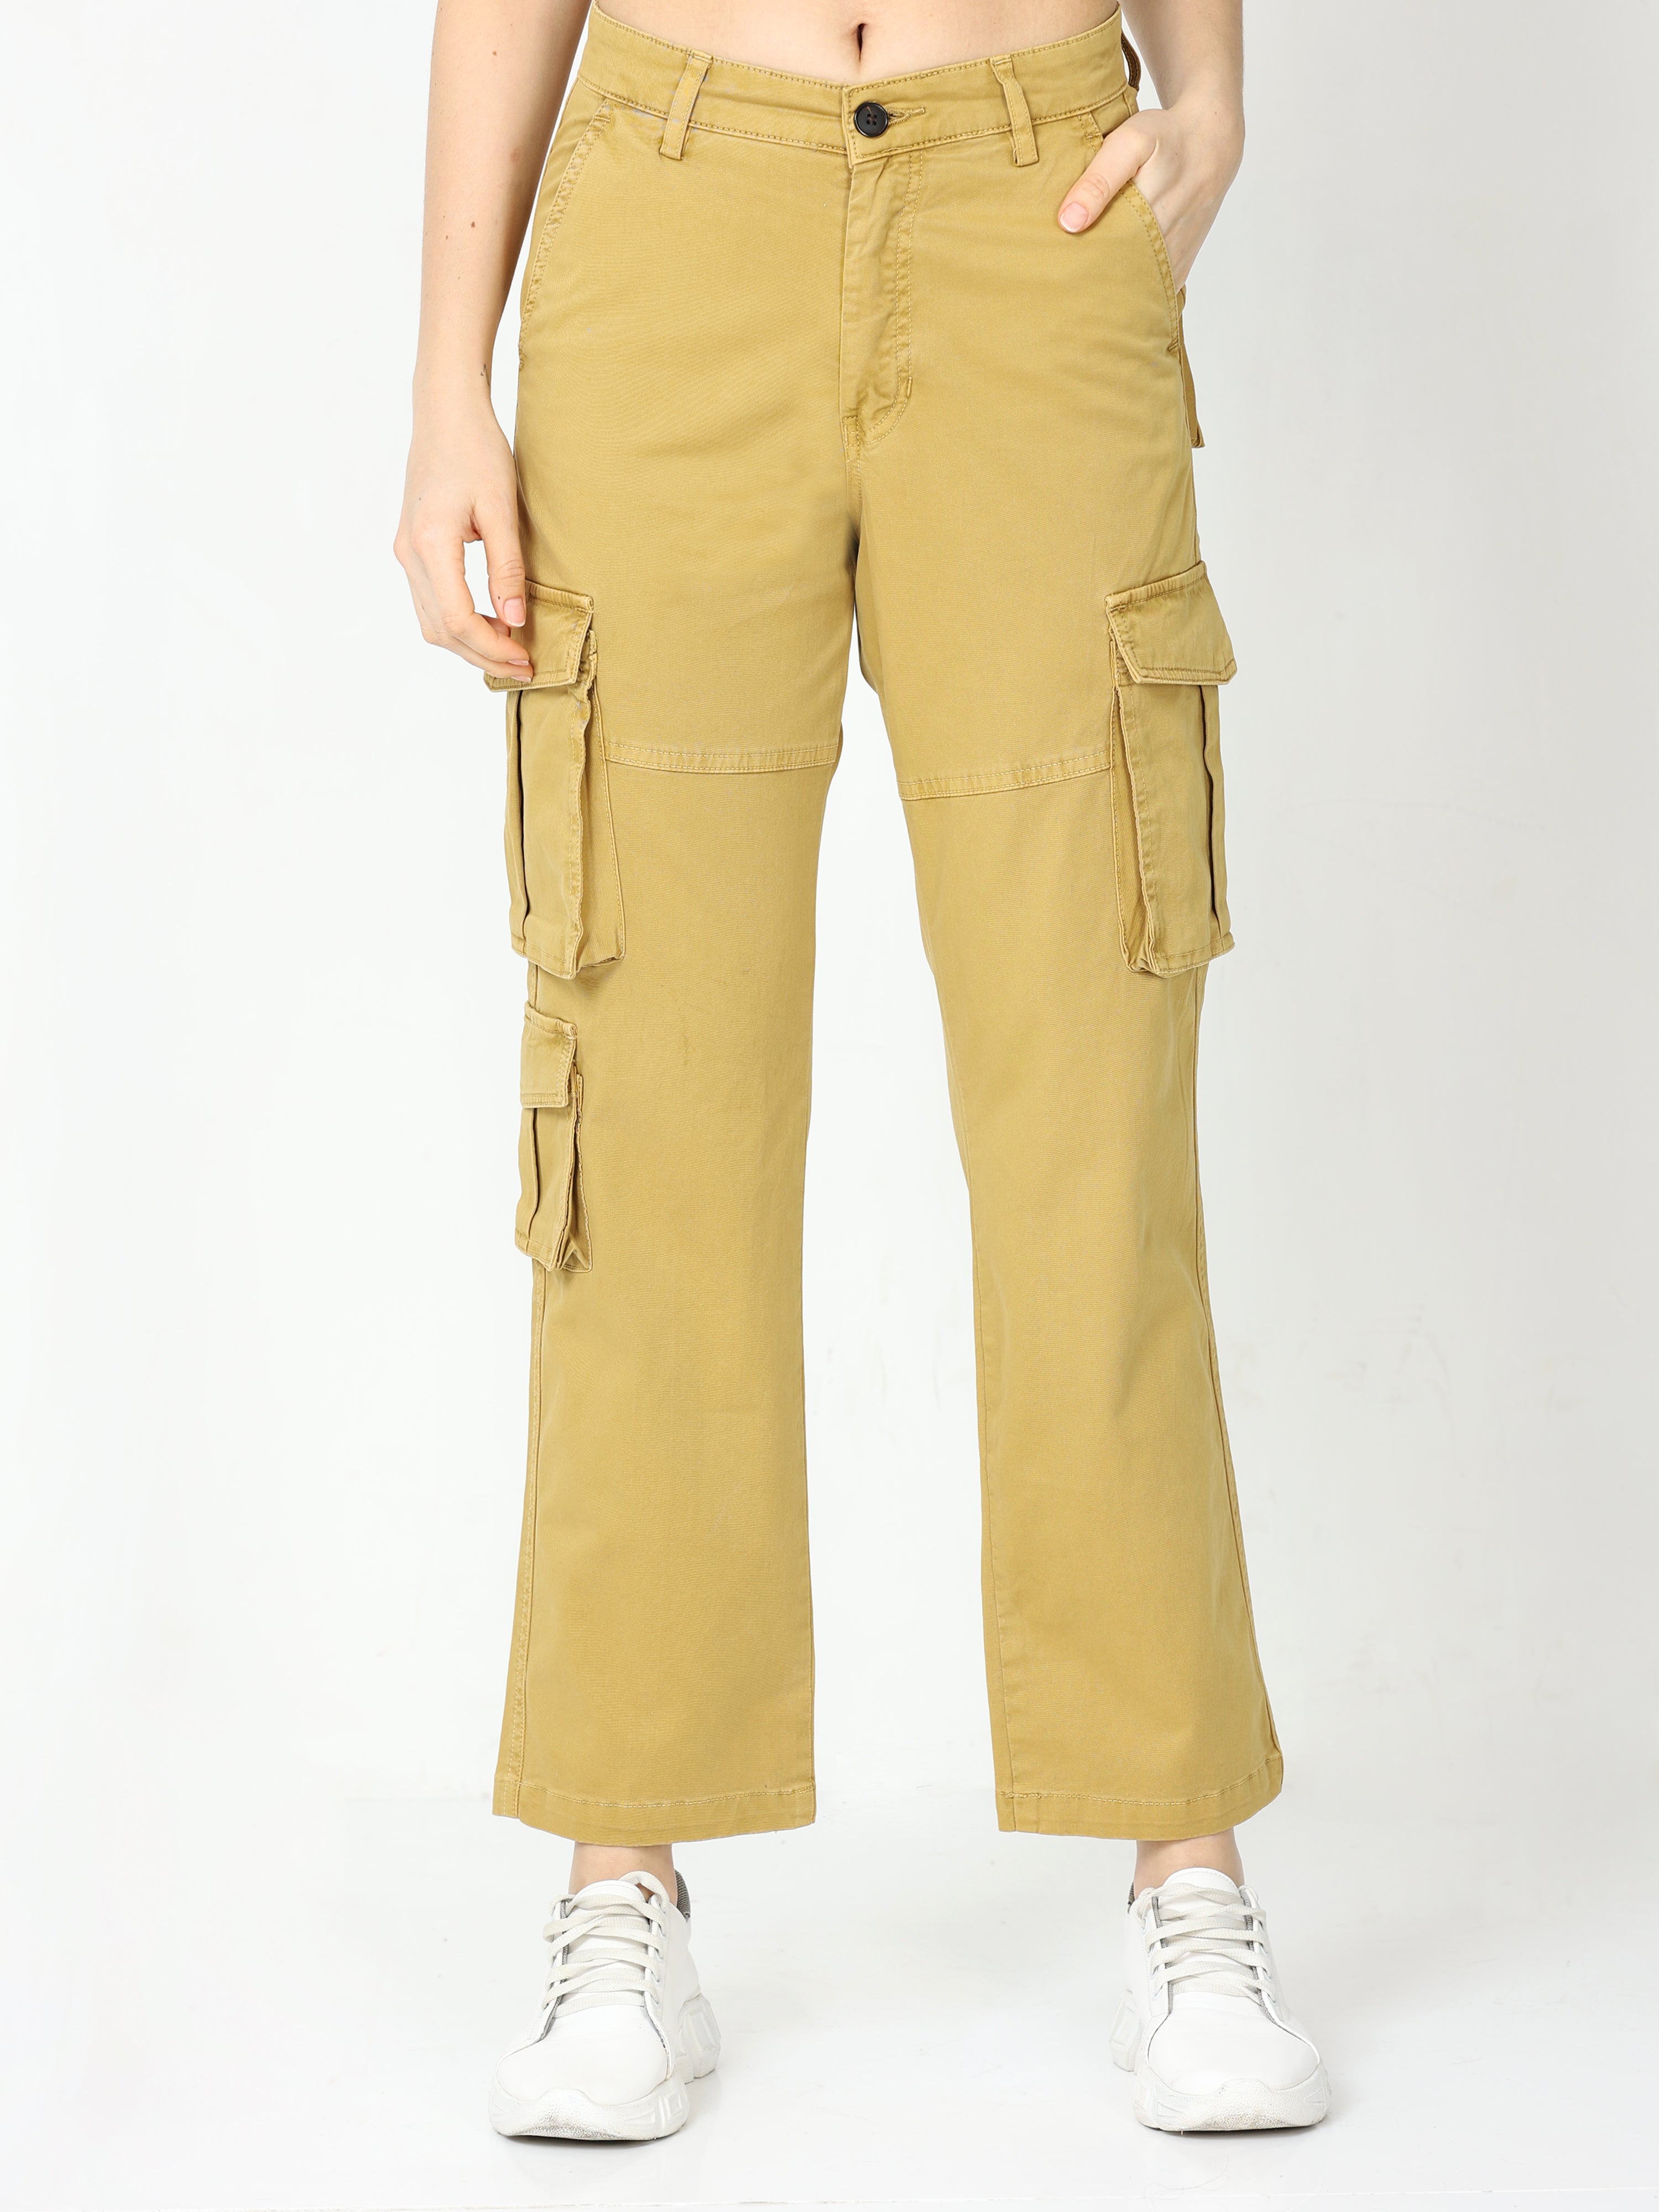 Buy stylish khaki cargo trousers women online at great price